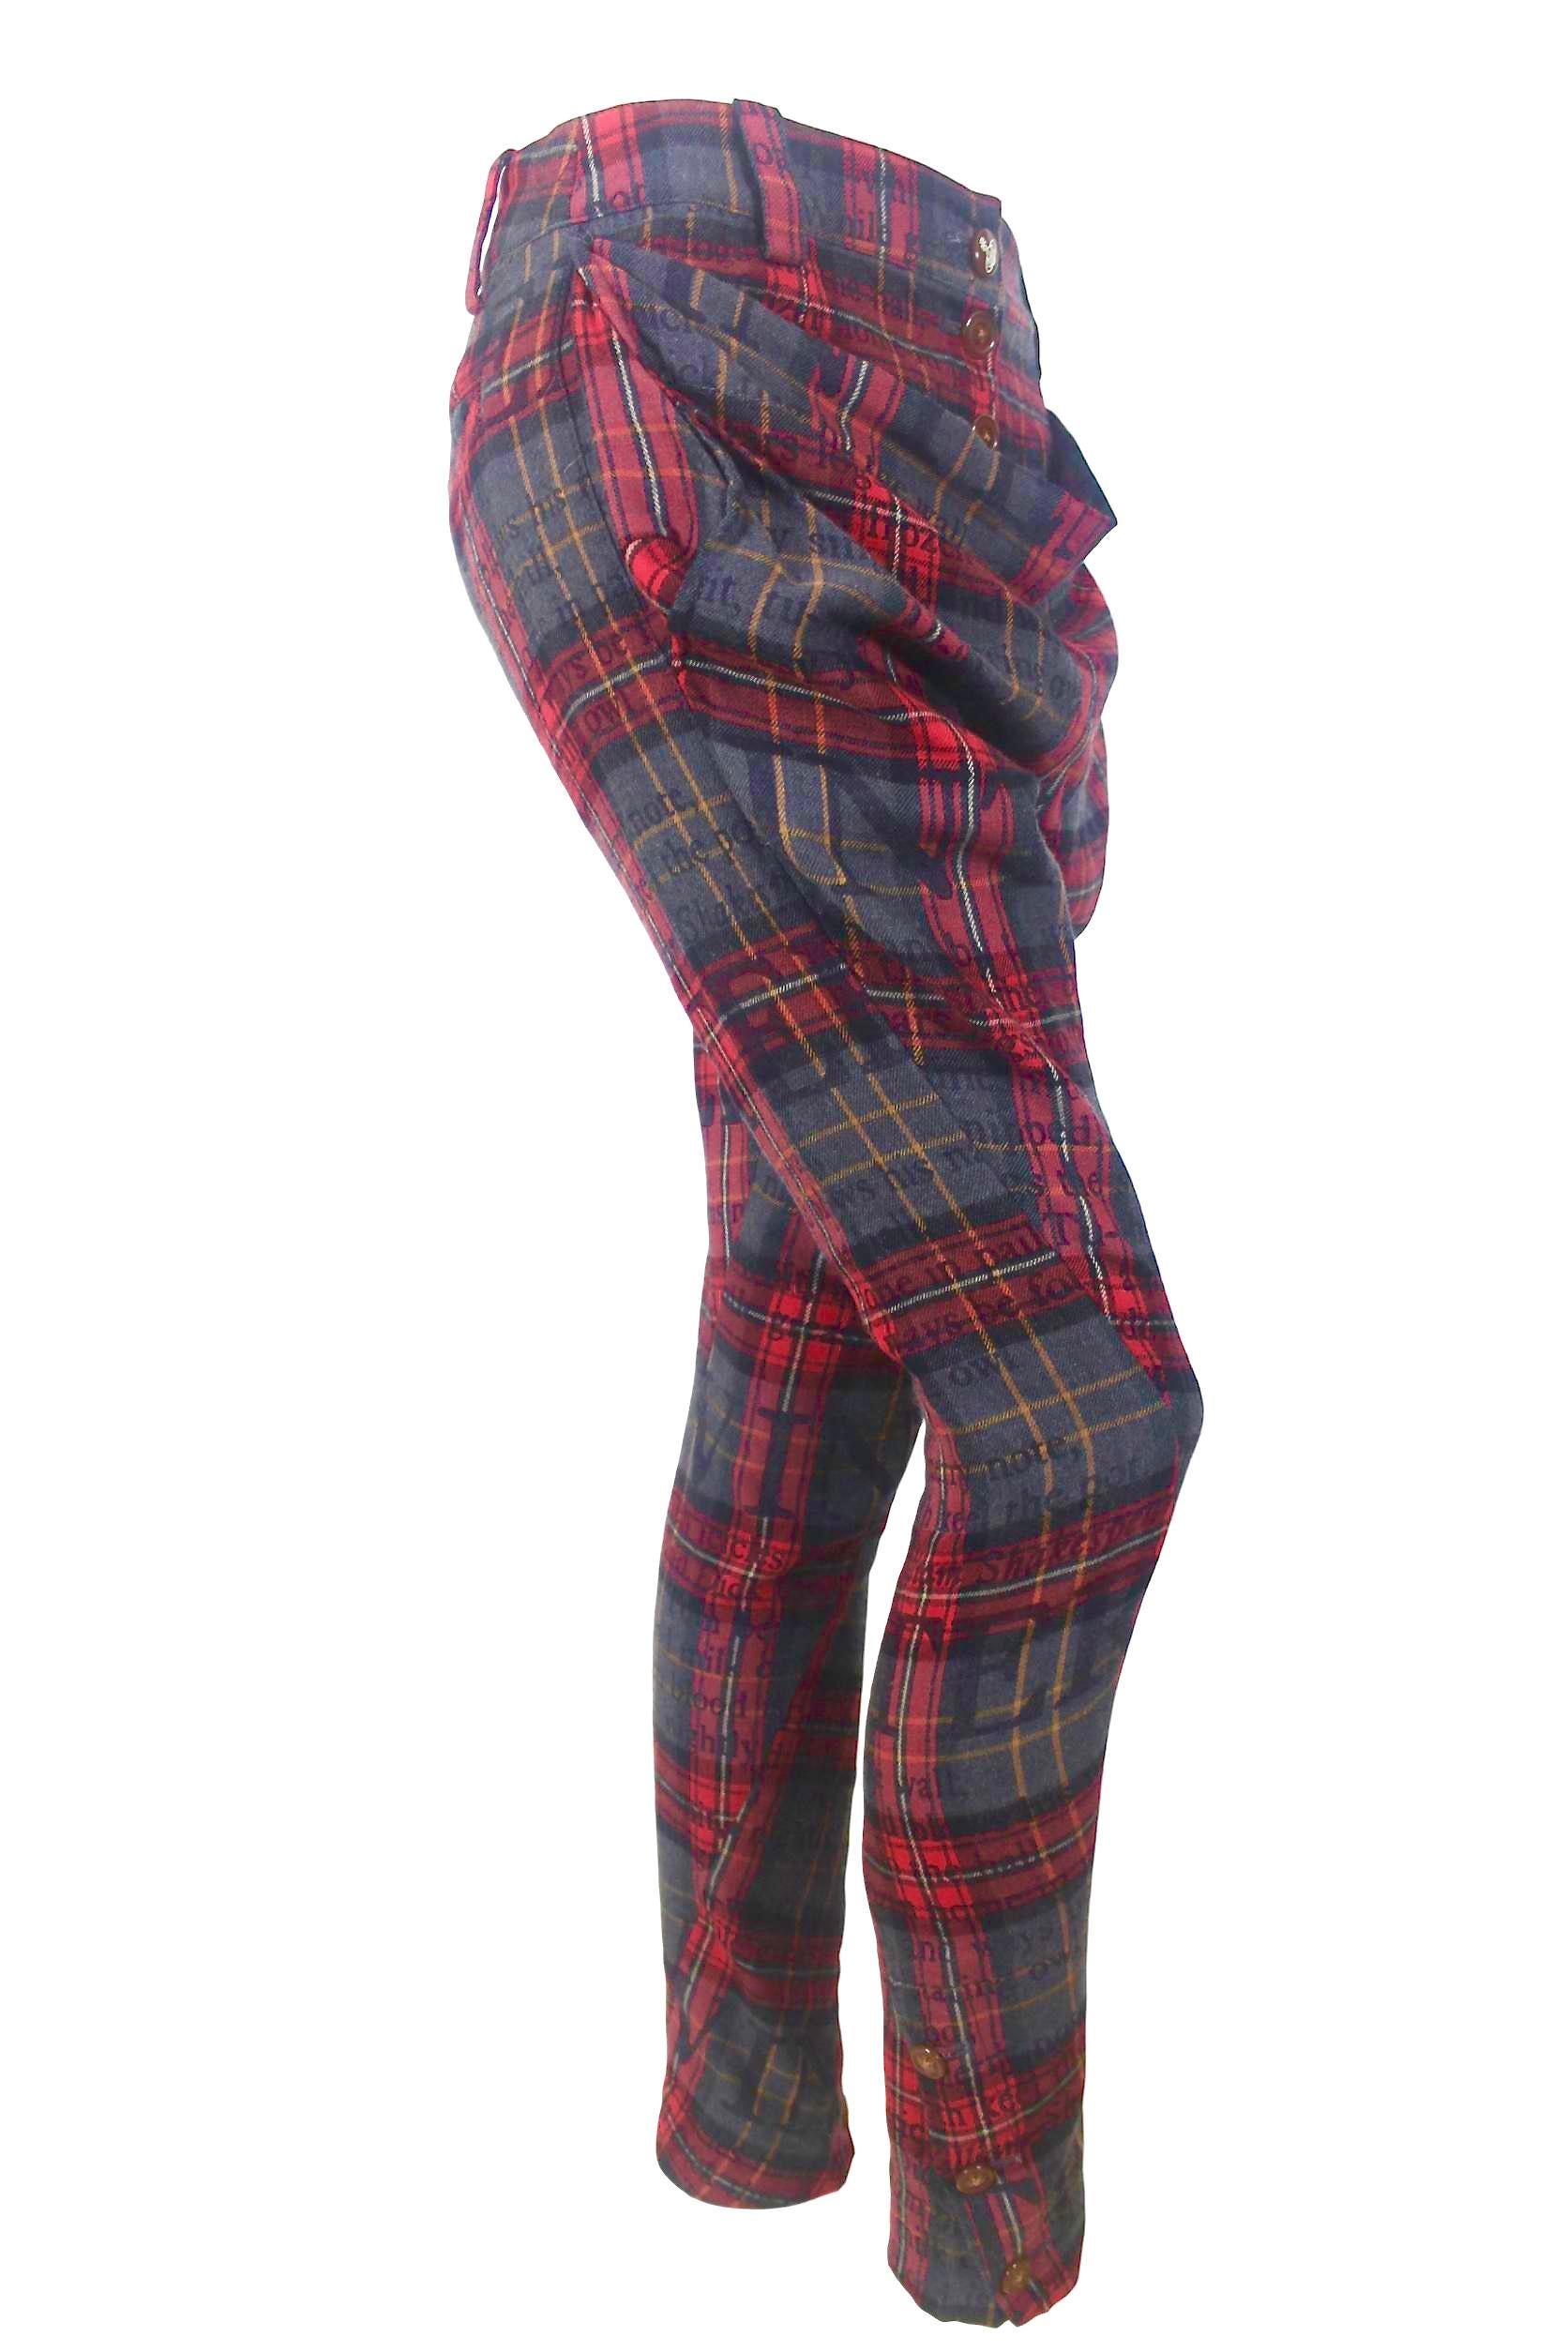 Vivienne Westwood Red Label Twisted Leg Tartan Trousers 8